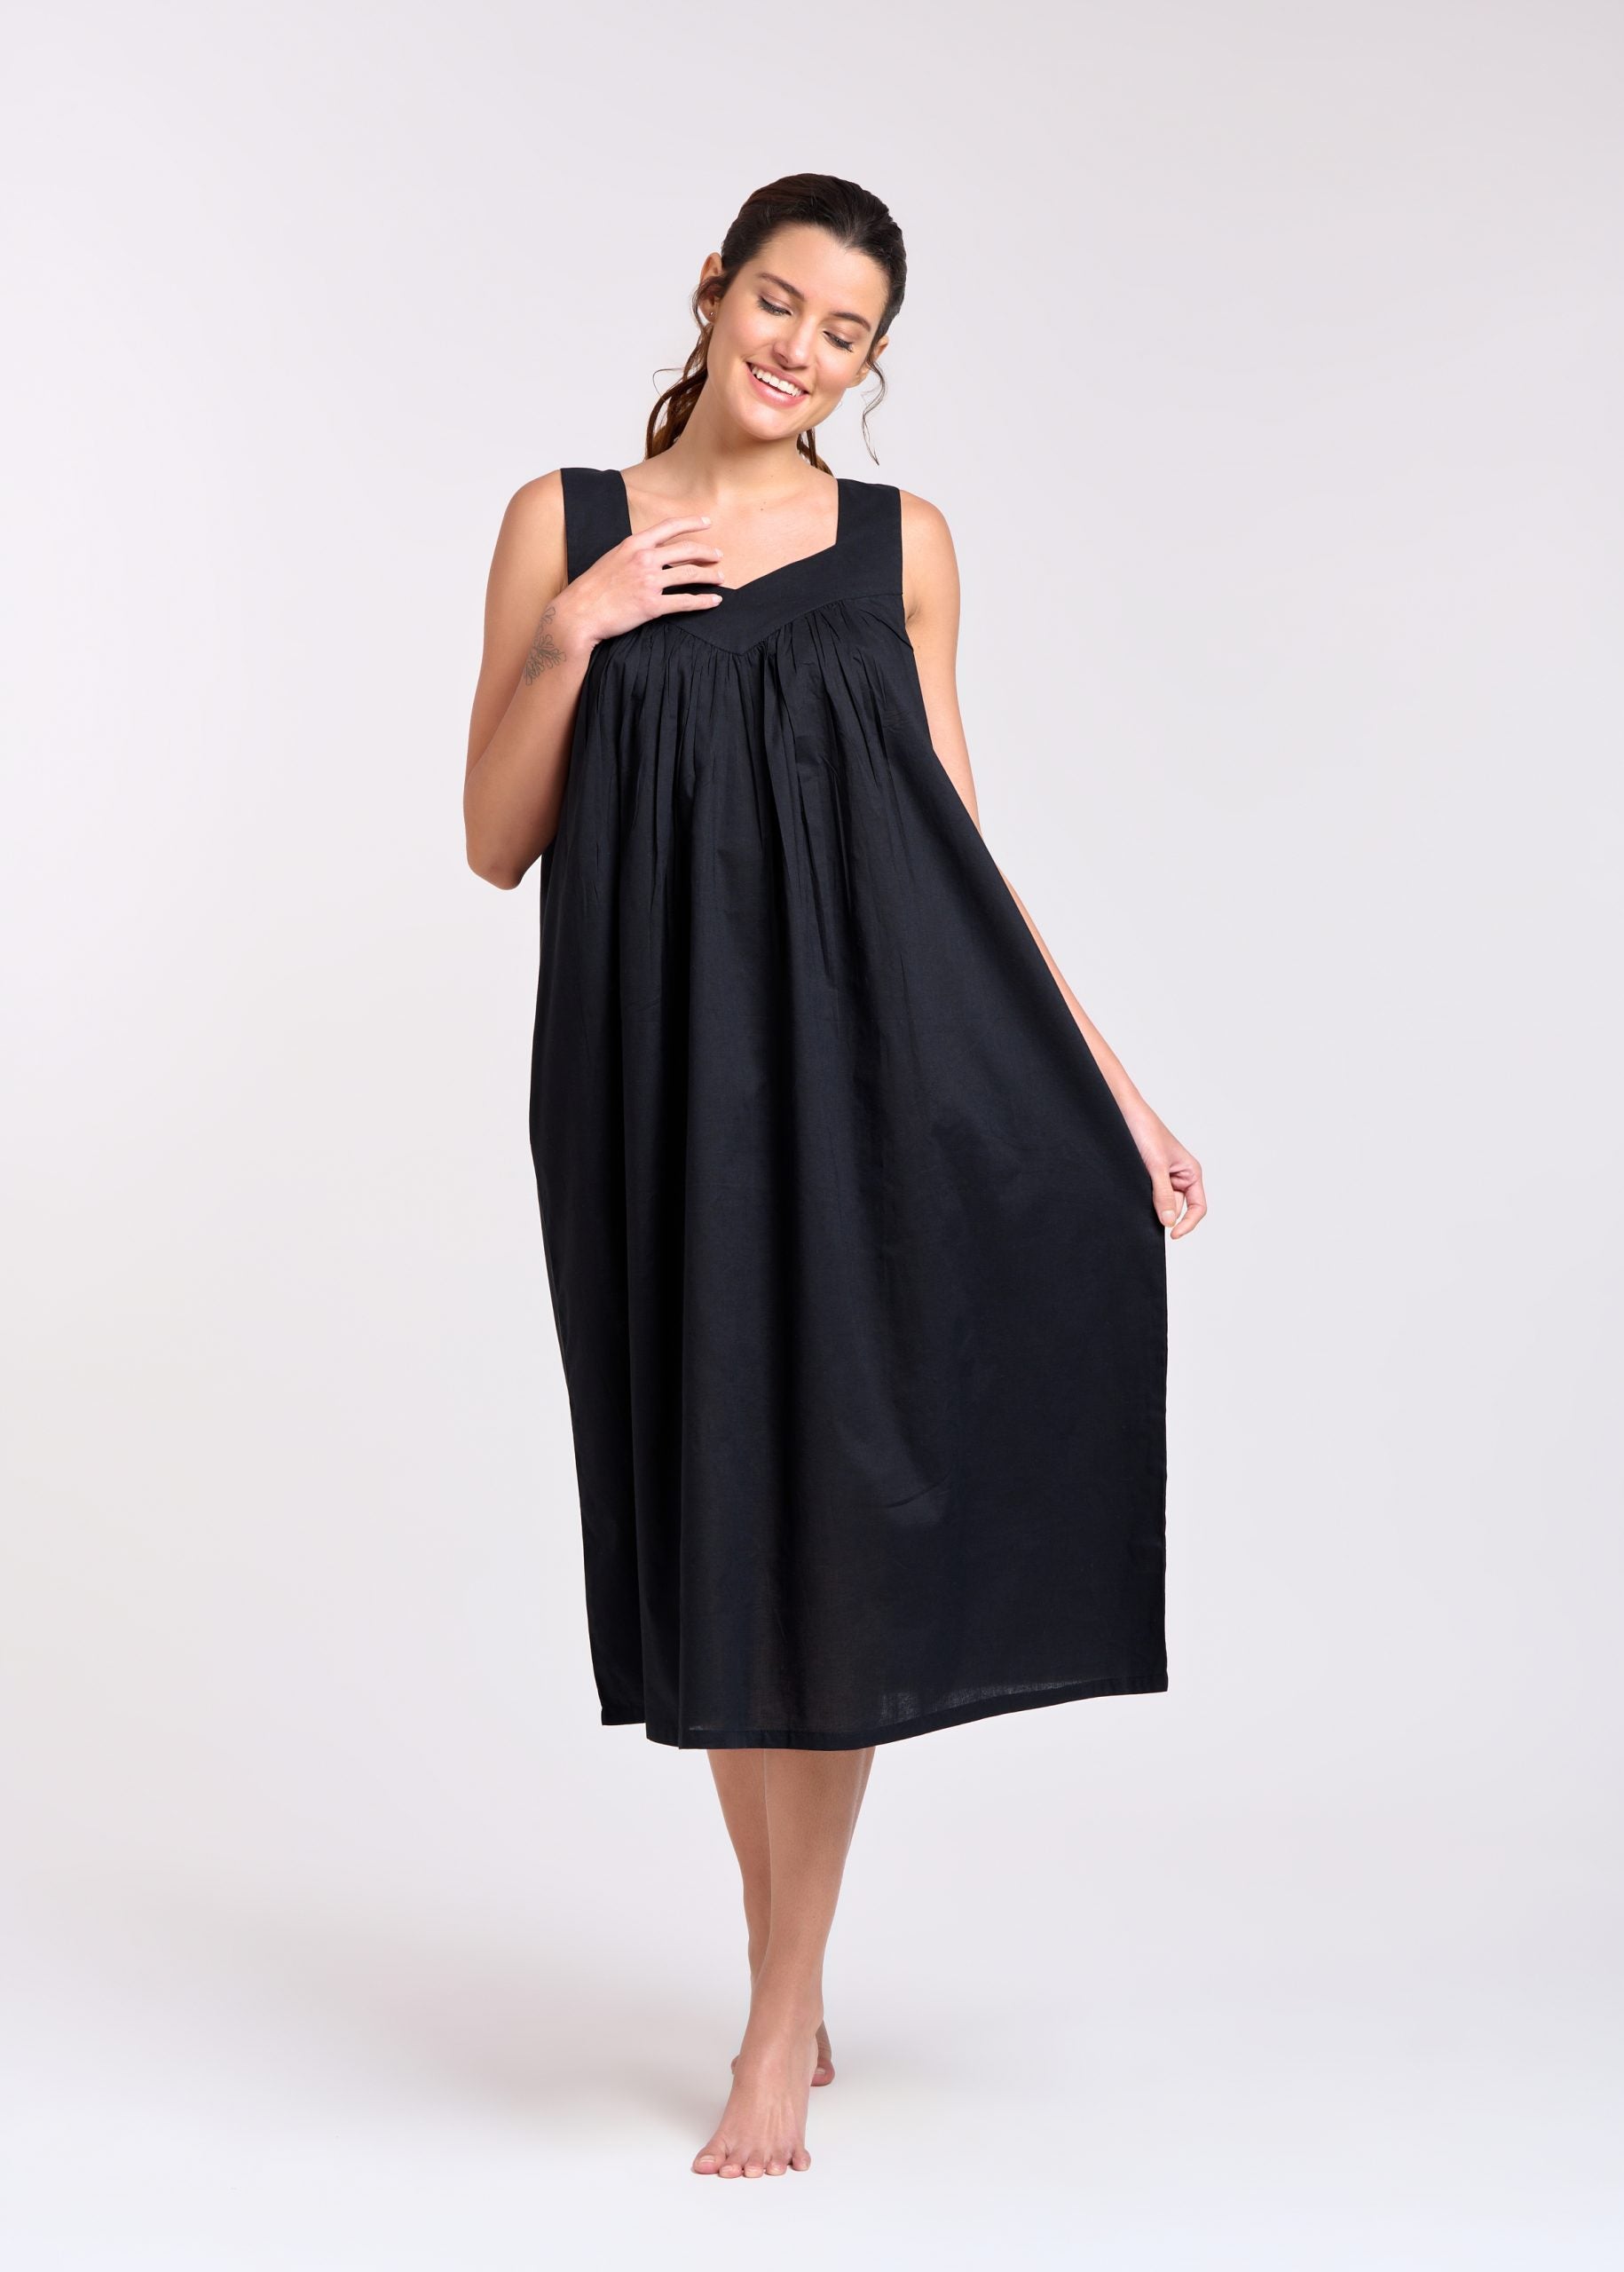 Arabella Nightie V-Neck Dress Black Eclectopia Gifts and Specialty Homewares 